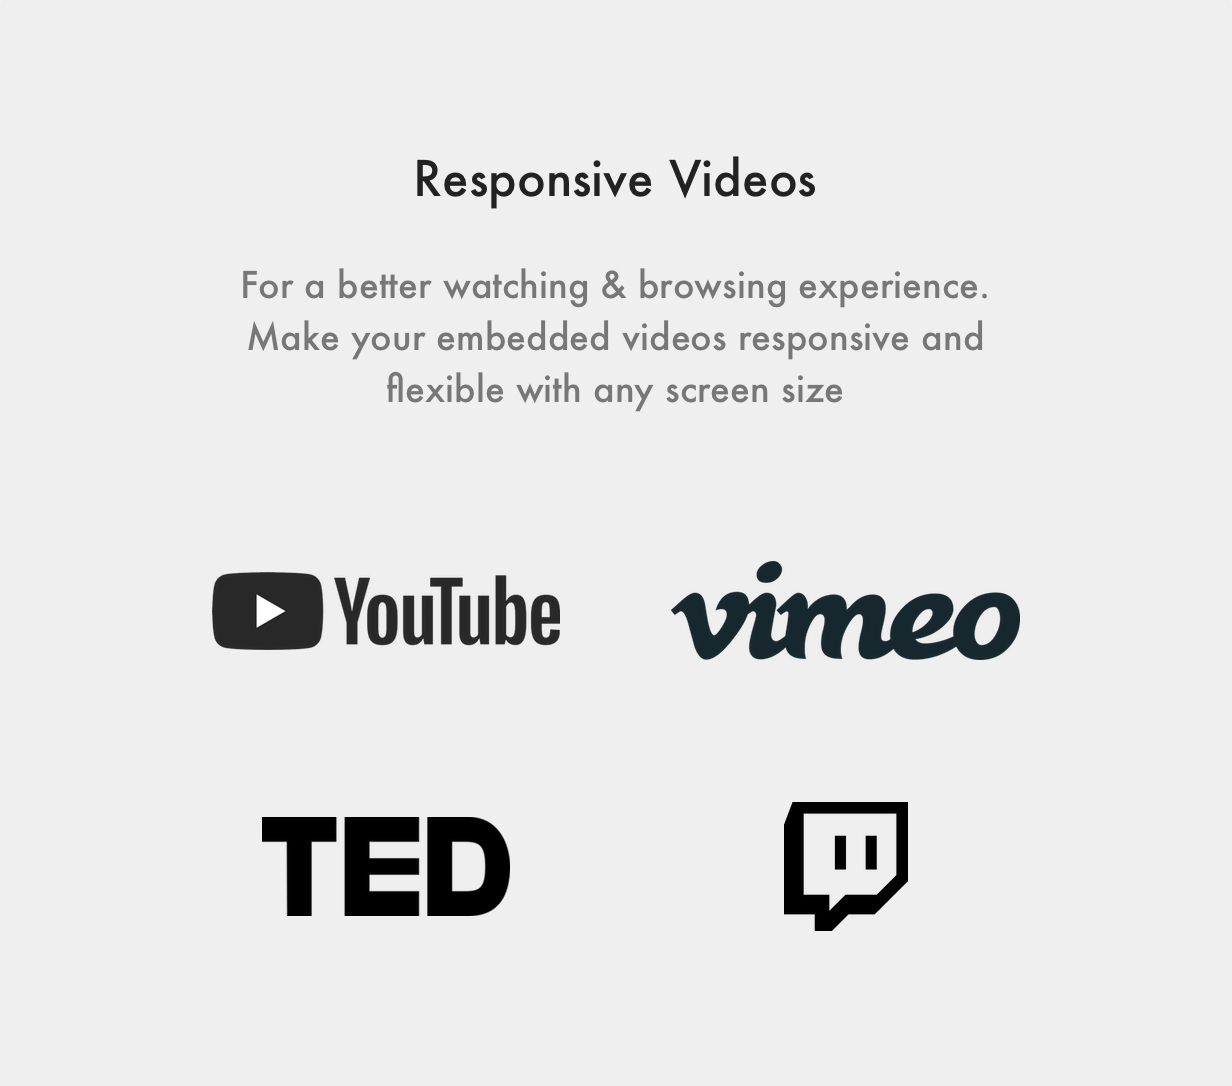 Nubia Jekyll Theme Responsive Videos (YouTube, Vimeo and TED)